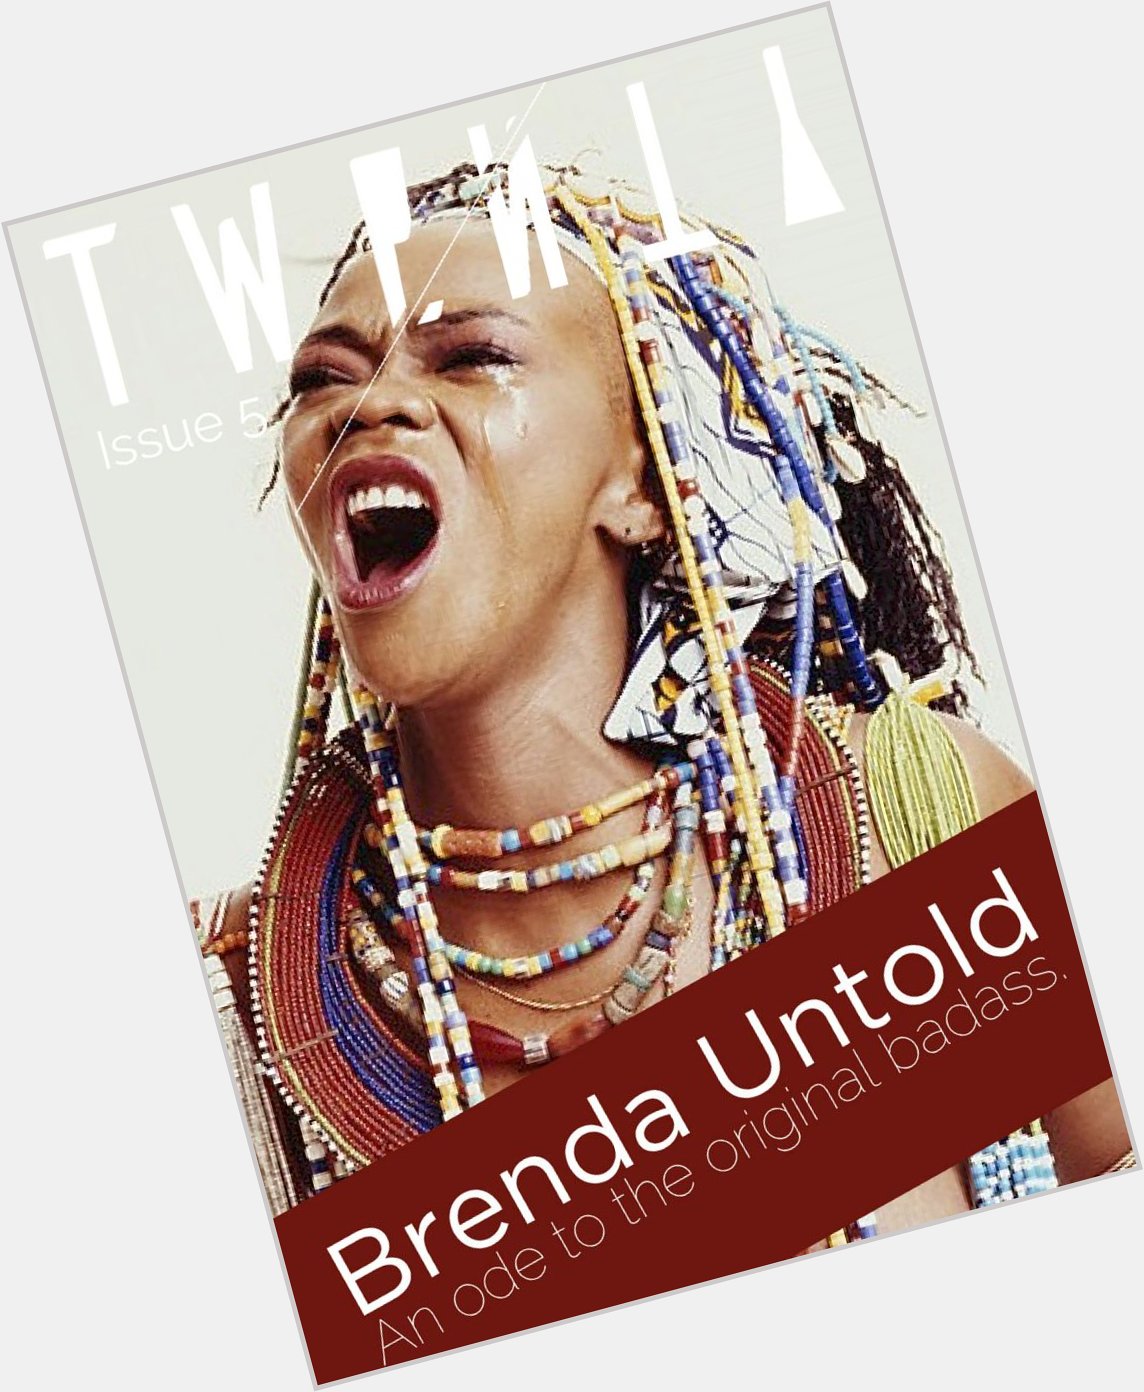 Brenda Fassie for Twenty Magazine.

An ode to the original badass!

Happy birthday King! 